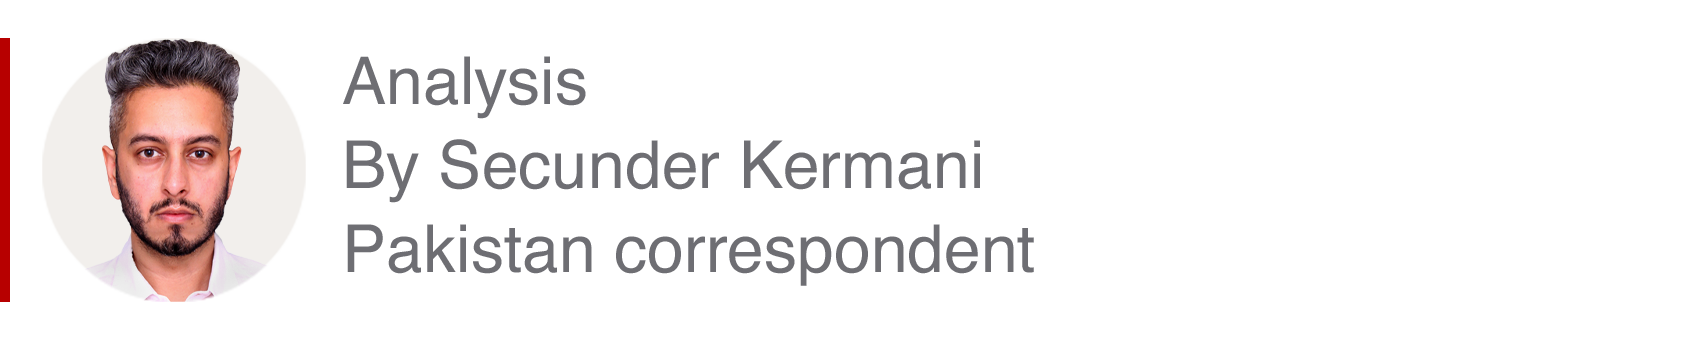 Analysis box by Secunder Kermani, Pakistan correspondent